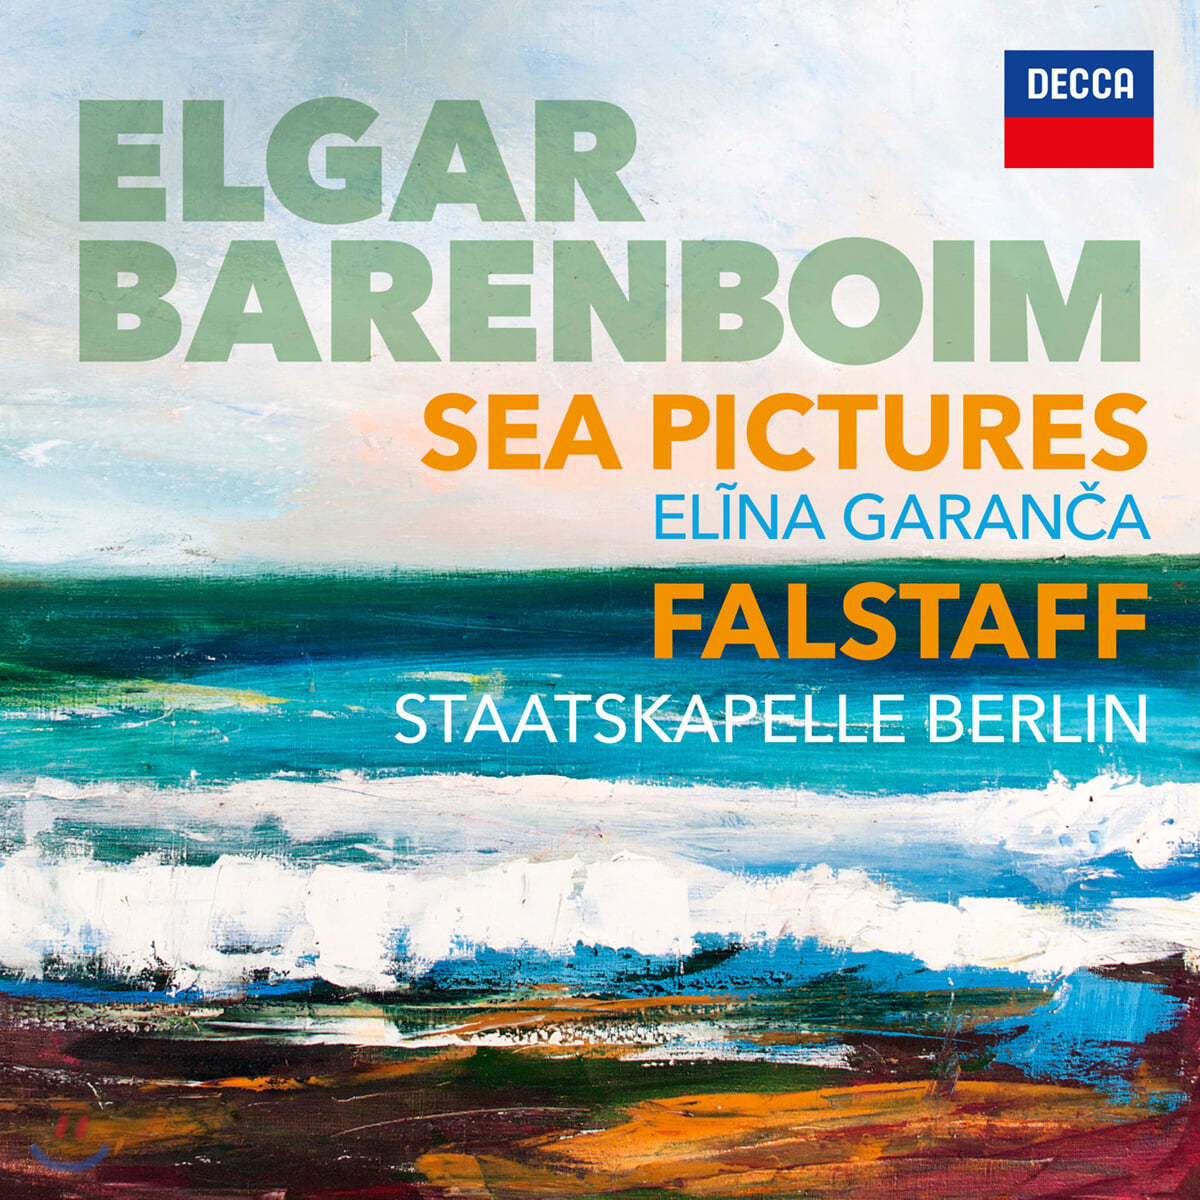 Daniel Barenboim 엘가: 바다풍경, 팔스타프 - 다니엘 바렌보임 (Elgar: Sea Pictures, Falstaff)